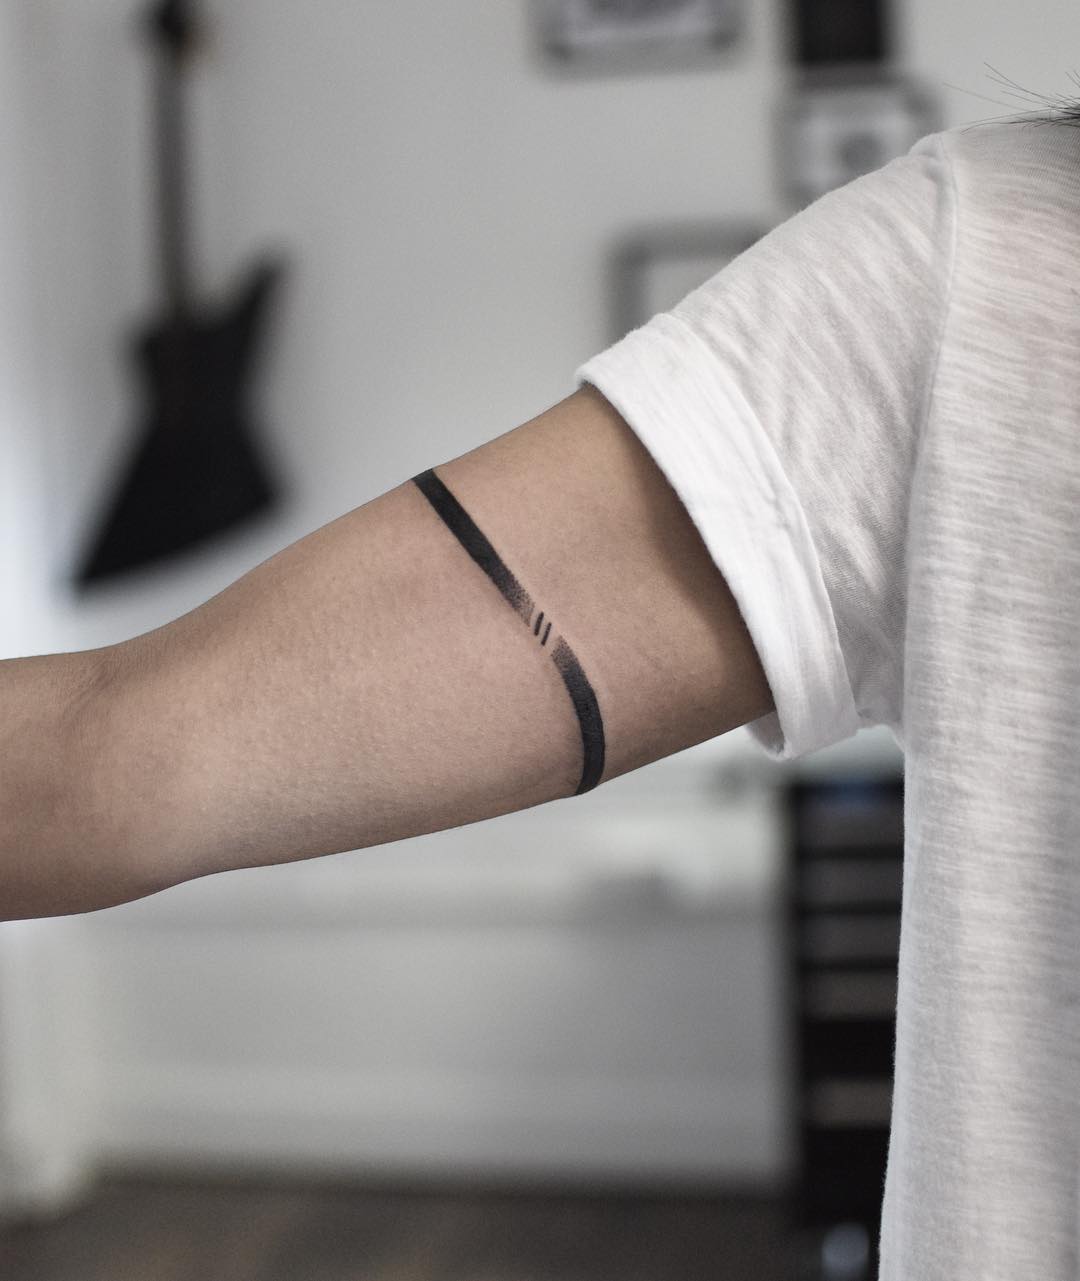 Wavy armband tattoo by Wagner Basei